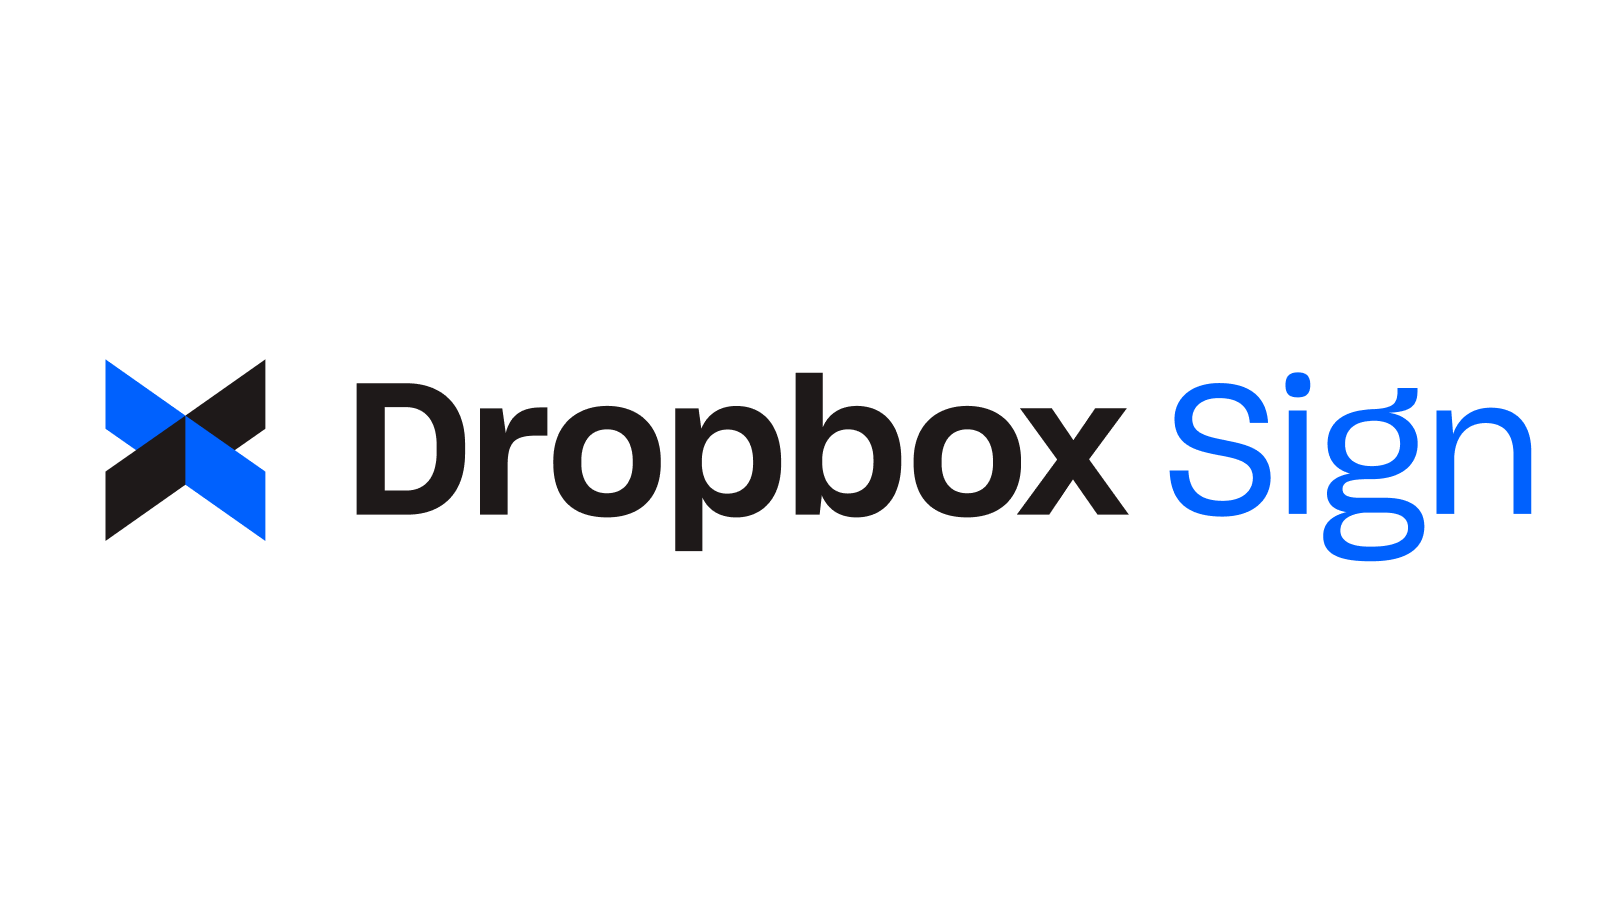 Dropbox Sign/ HelloSign logo